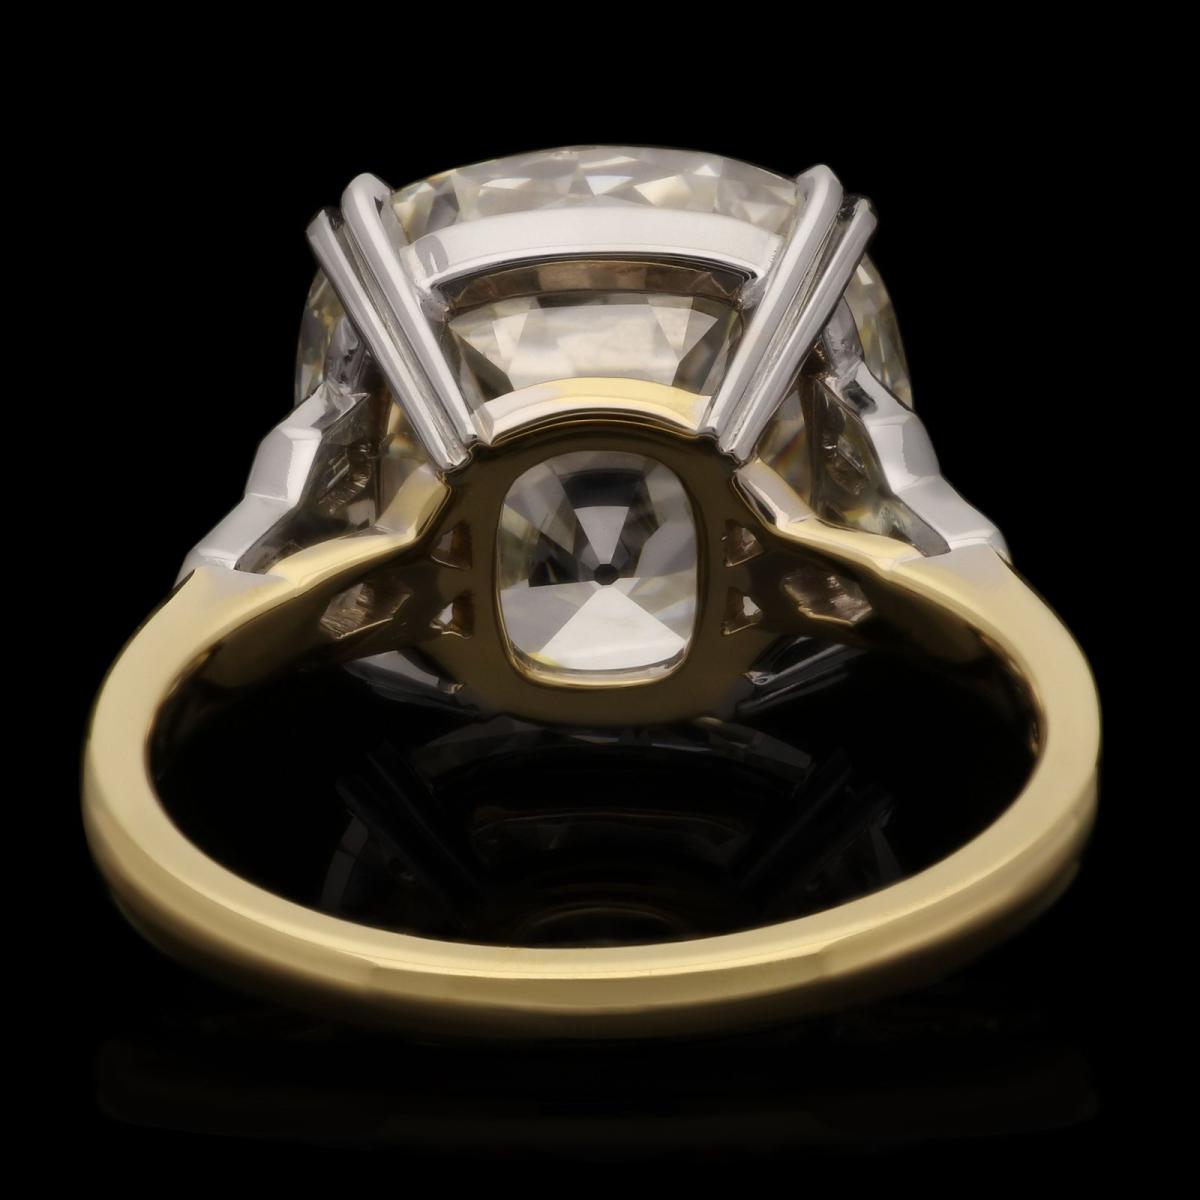 Hancocks 8.46ct Old Mine Brilliant Cut Diamond Ring With Honeycomb Shoulders